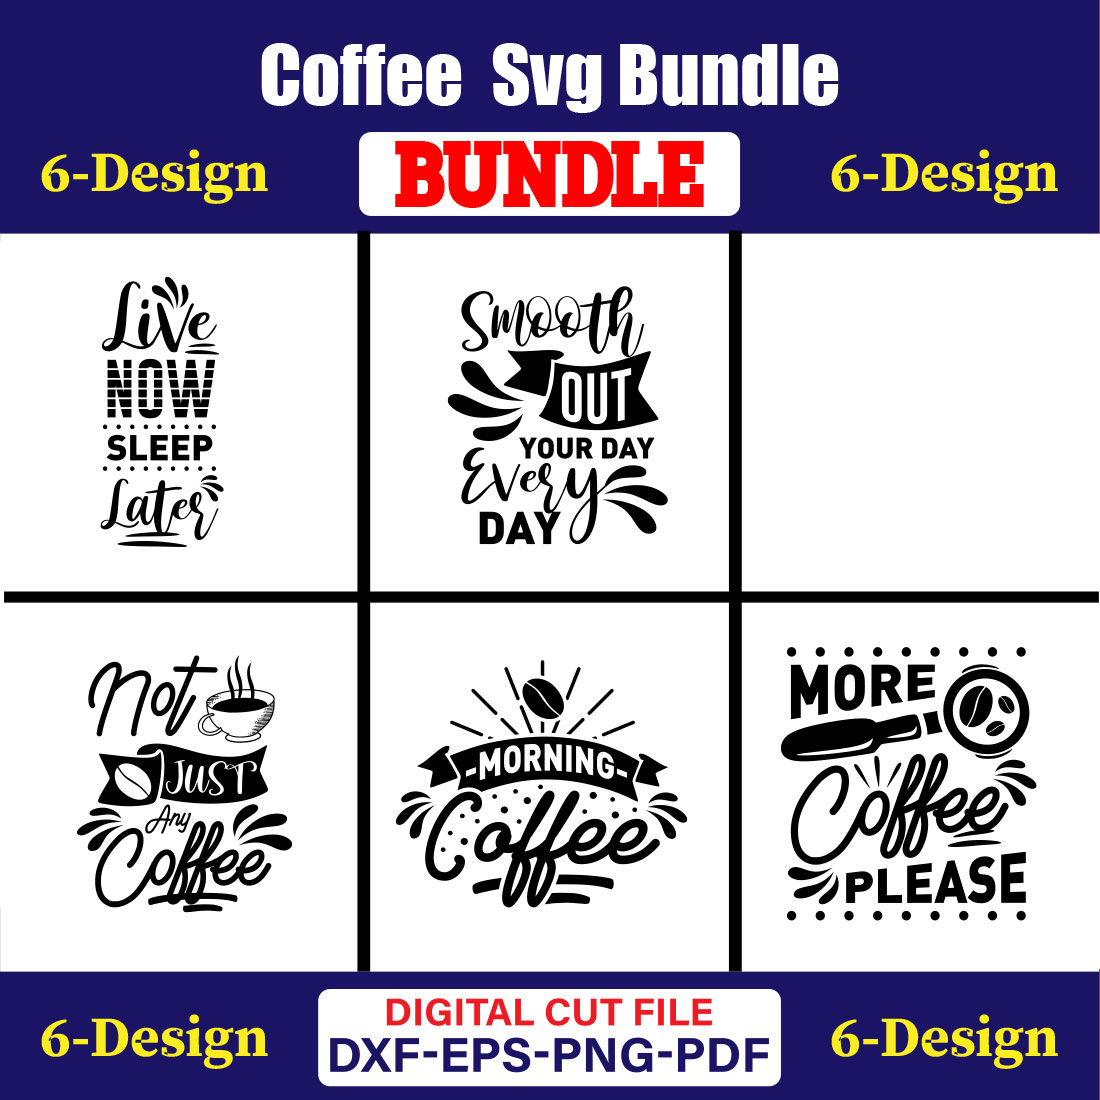 Coffee T-shirt Design Bundle Vol-13 cover image.